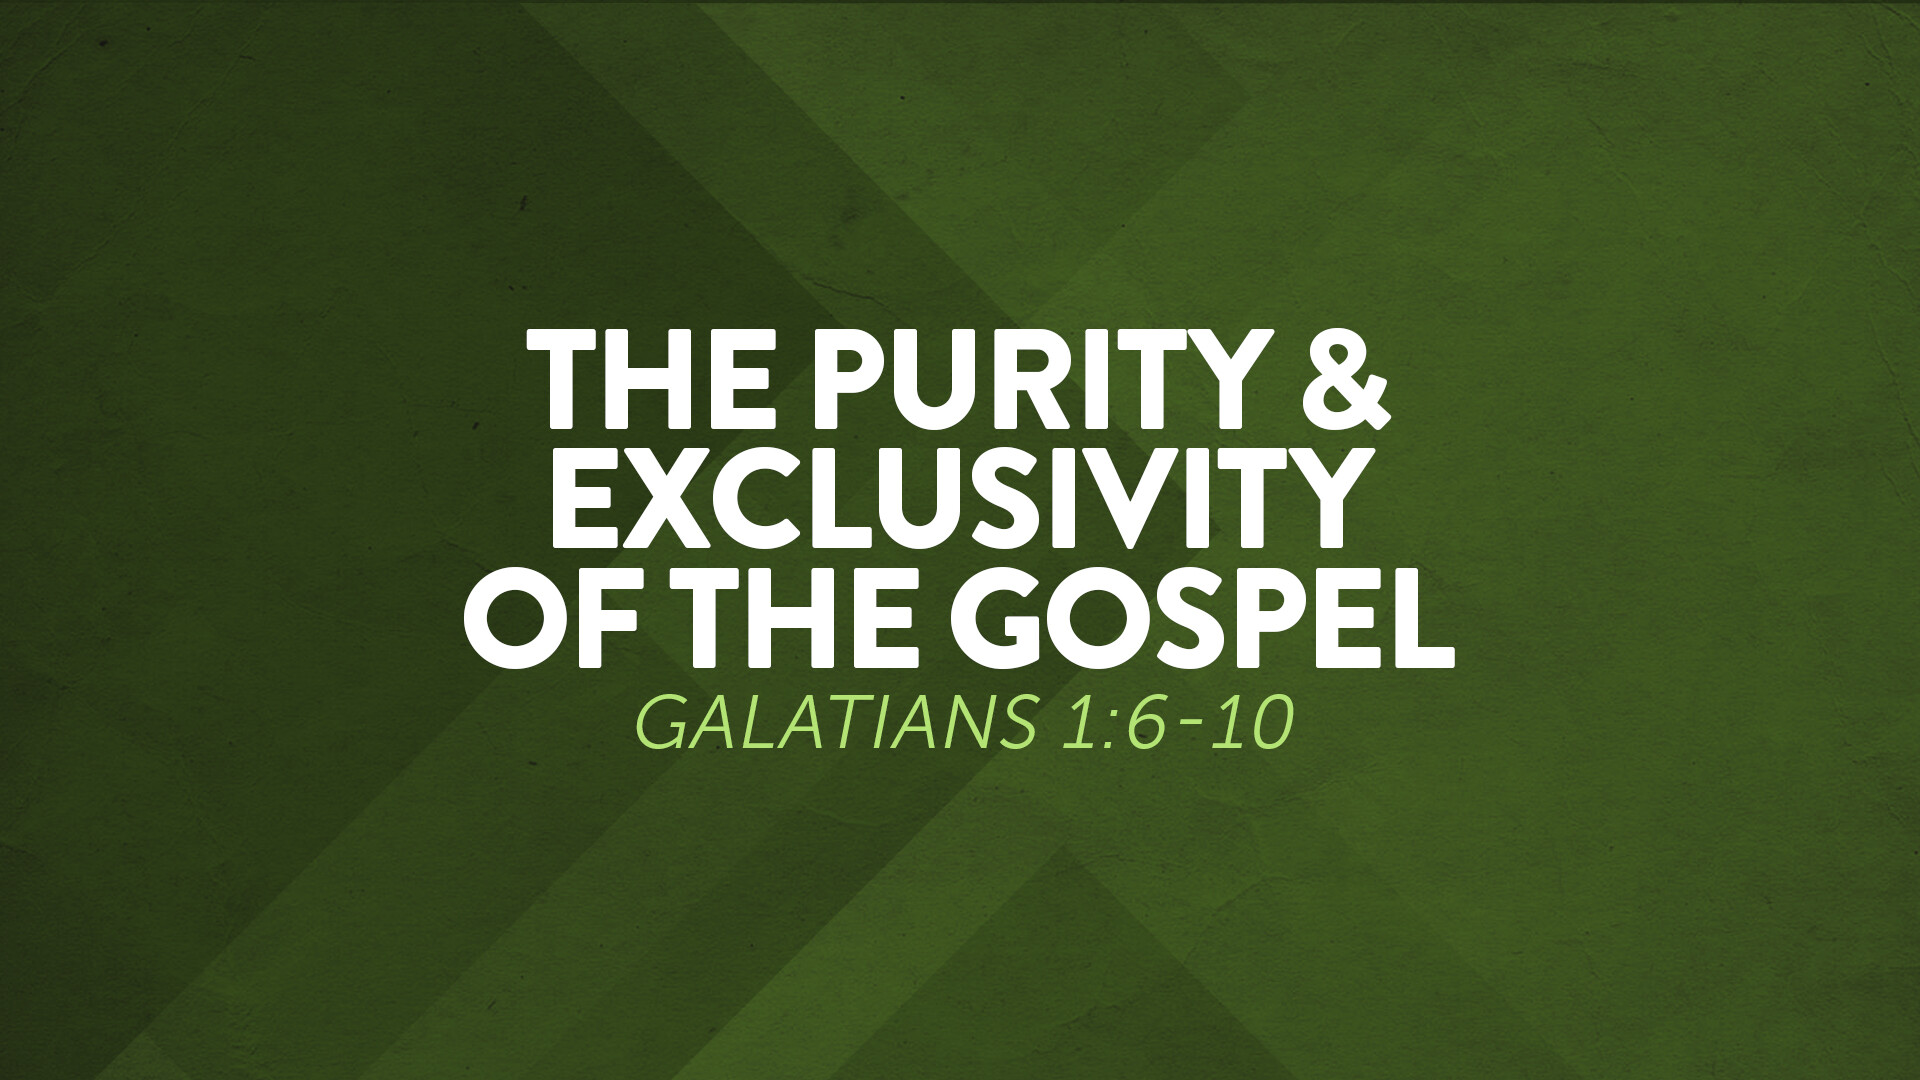 The Purity & Exclusivity of The Gospel.